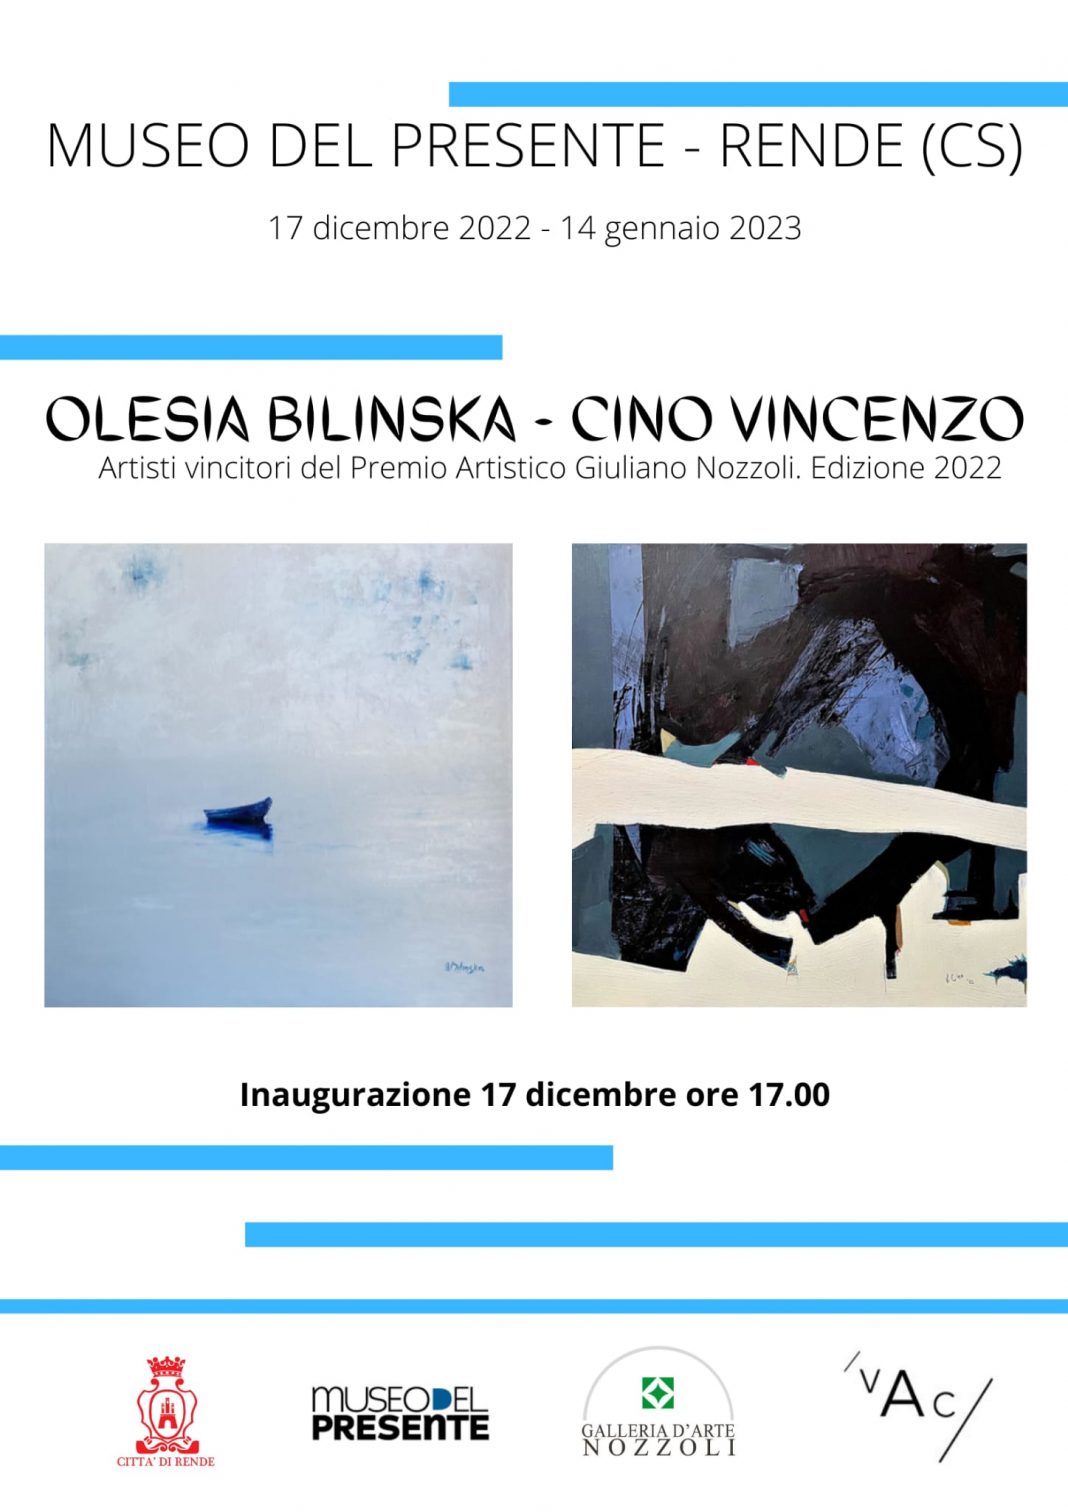 Olesia Bilinska / Cino Vincenzohttps://www.exibart.com/repository/media/formidable/11/img/367/1-1068x1512.jpg